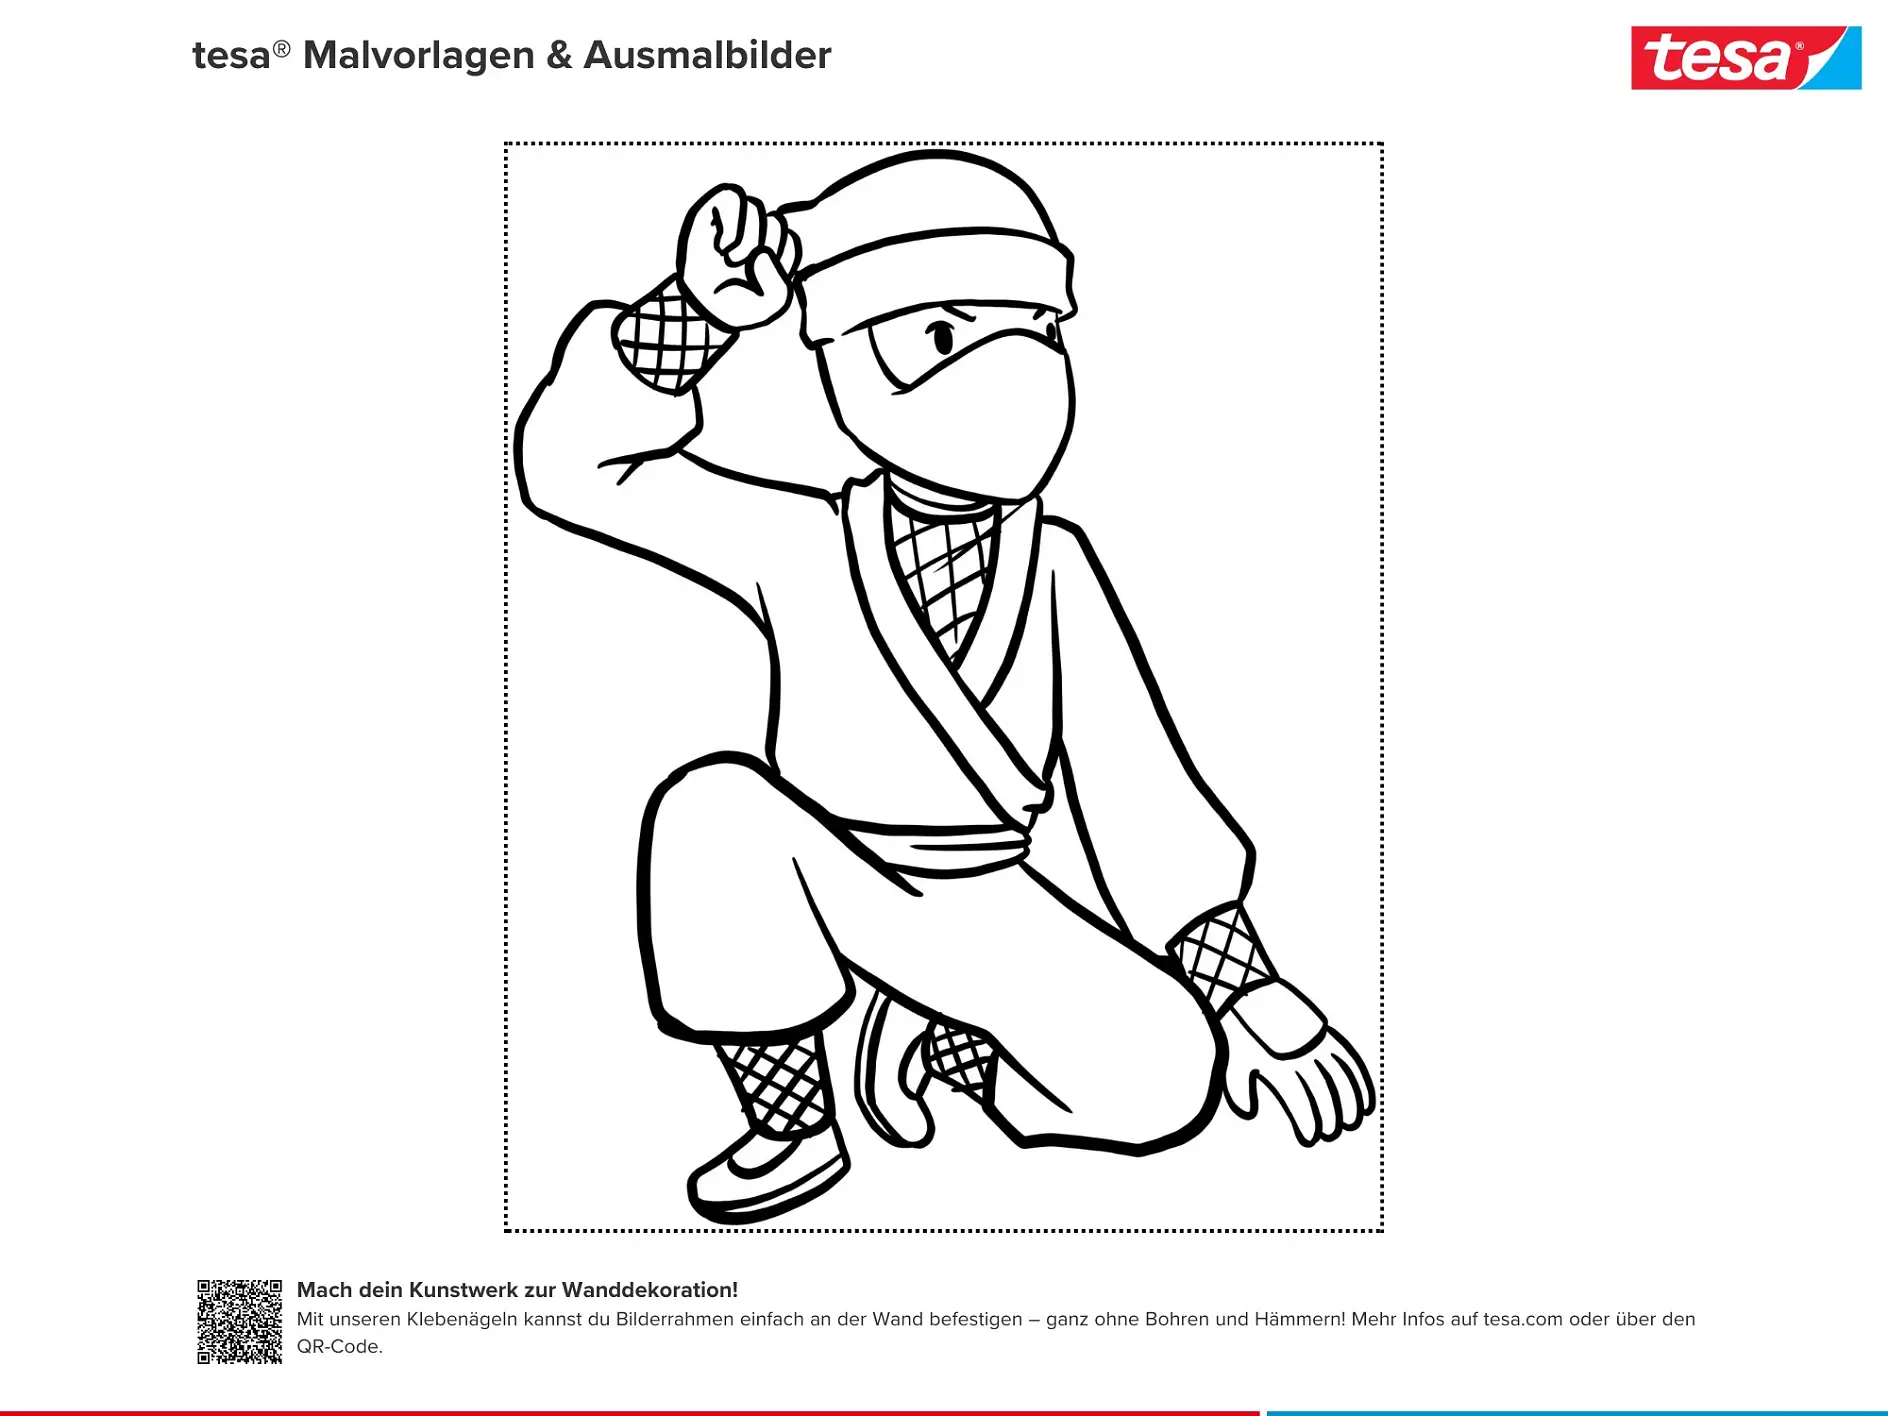 Ausmalbild Ninja in Lauschpose mit erhobener Hand